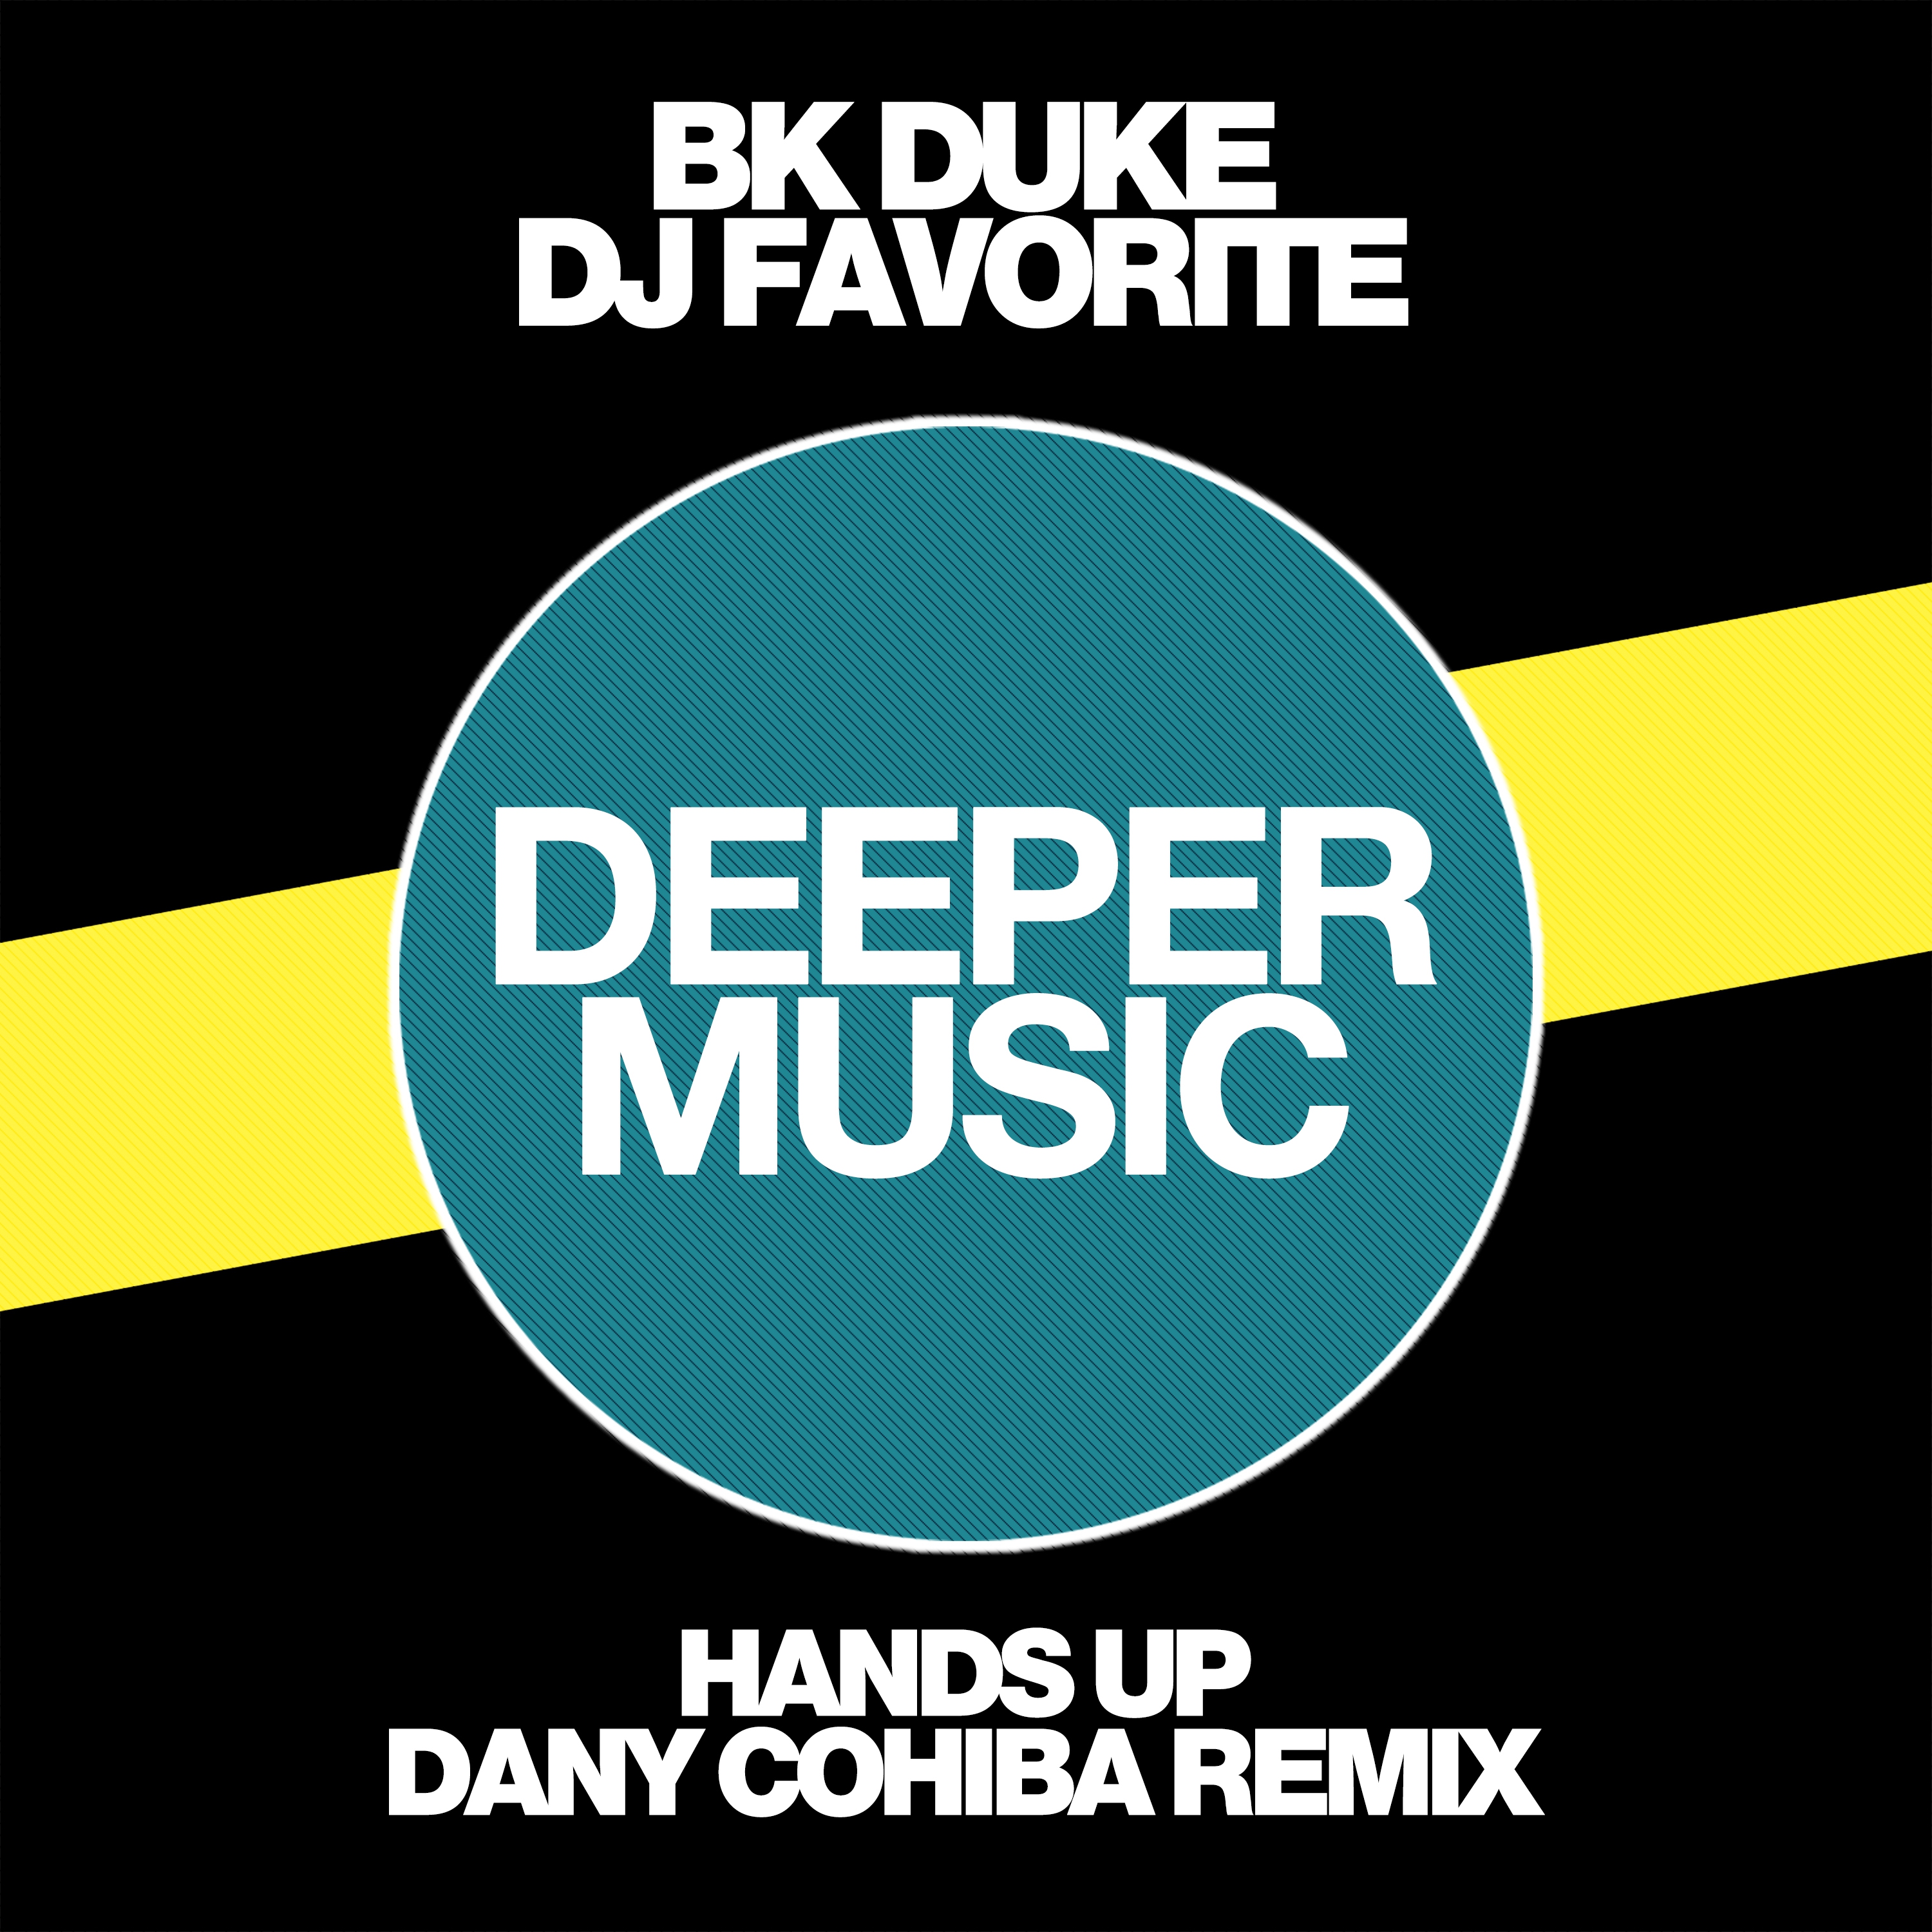 Hand Up (Dany Cohiba Remix)